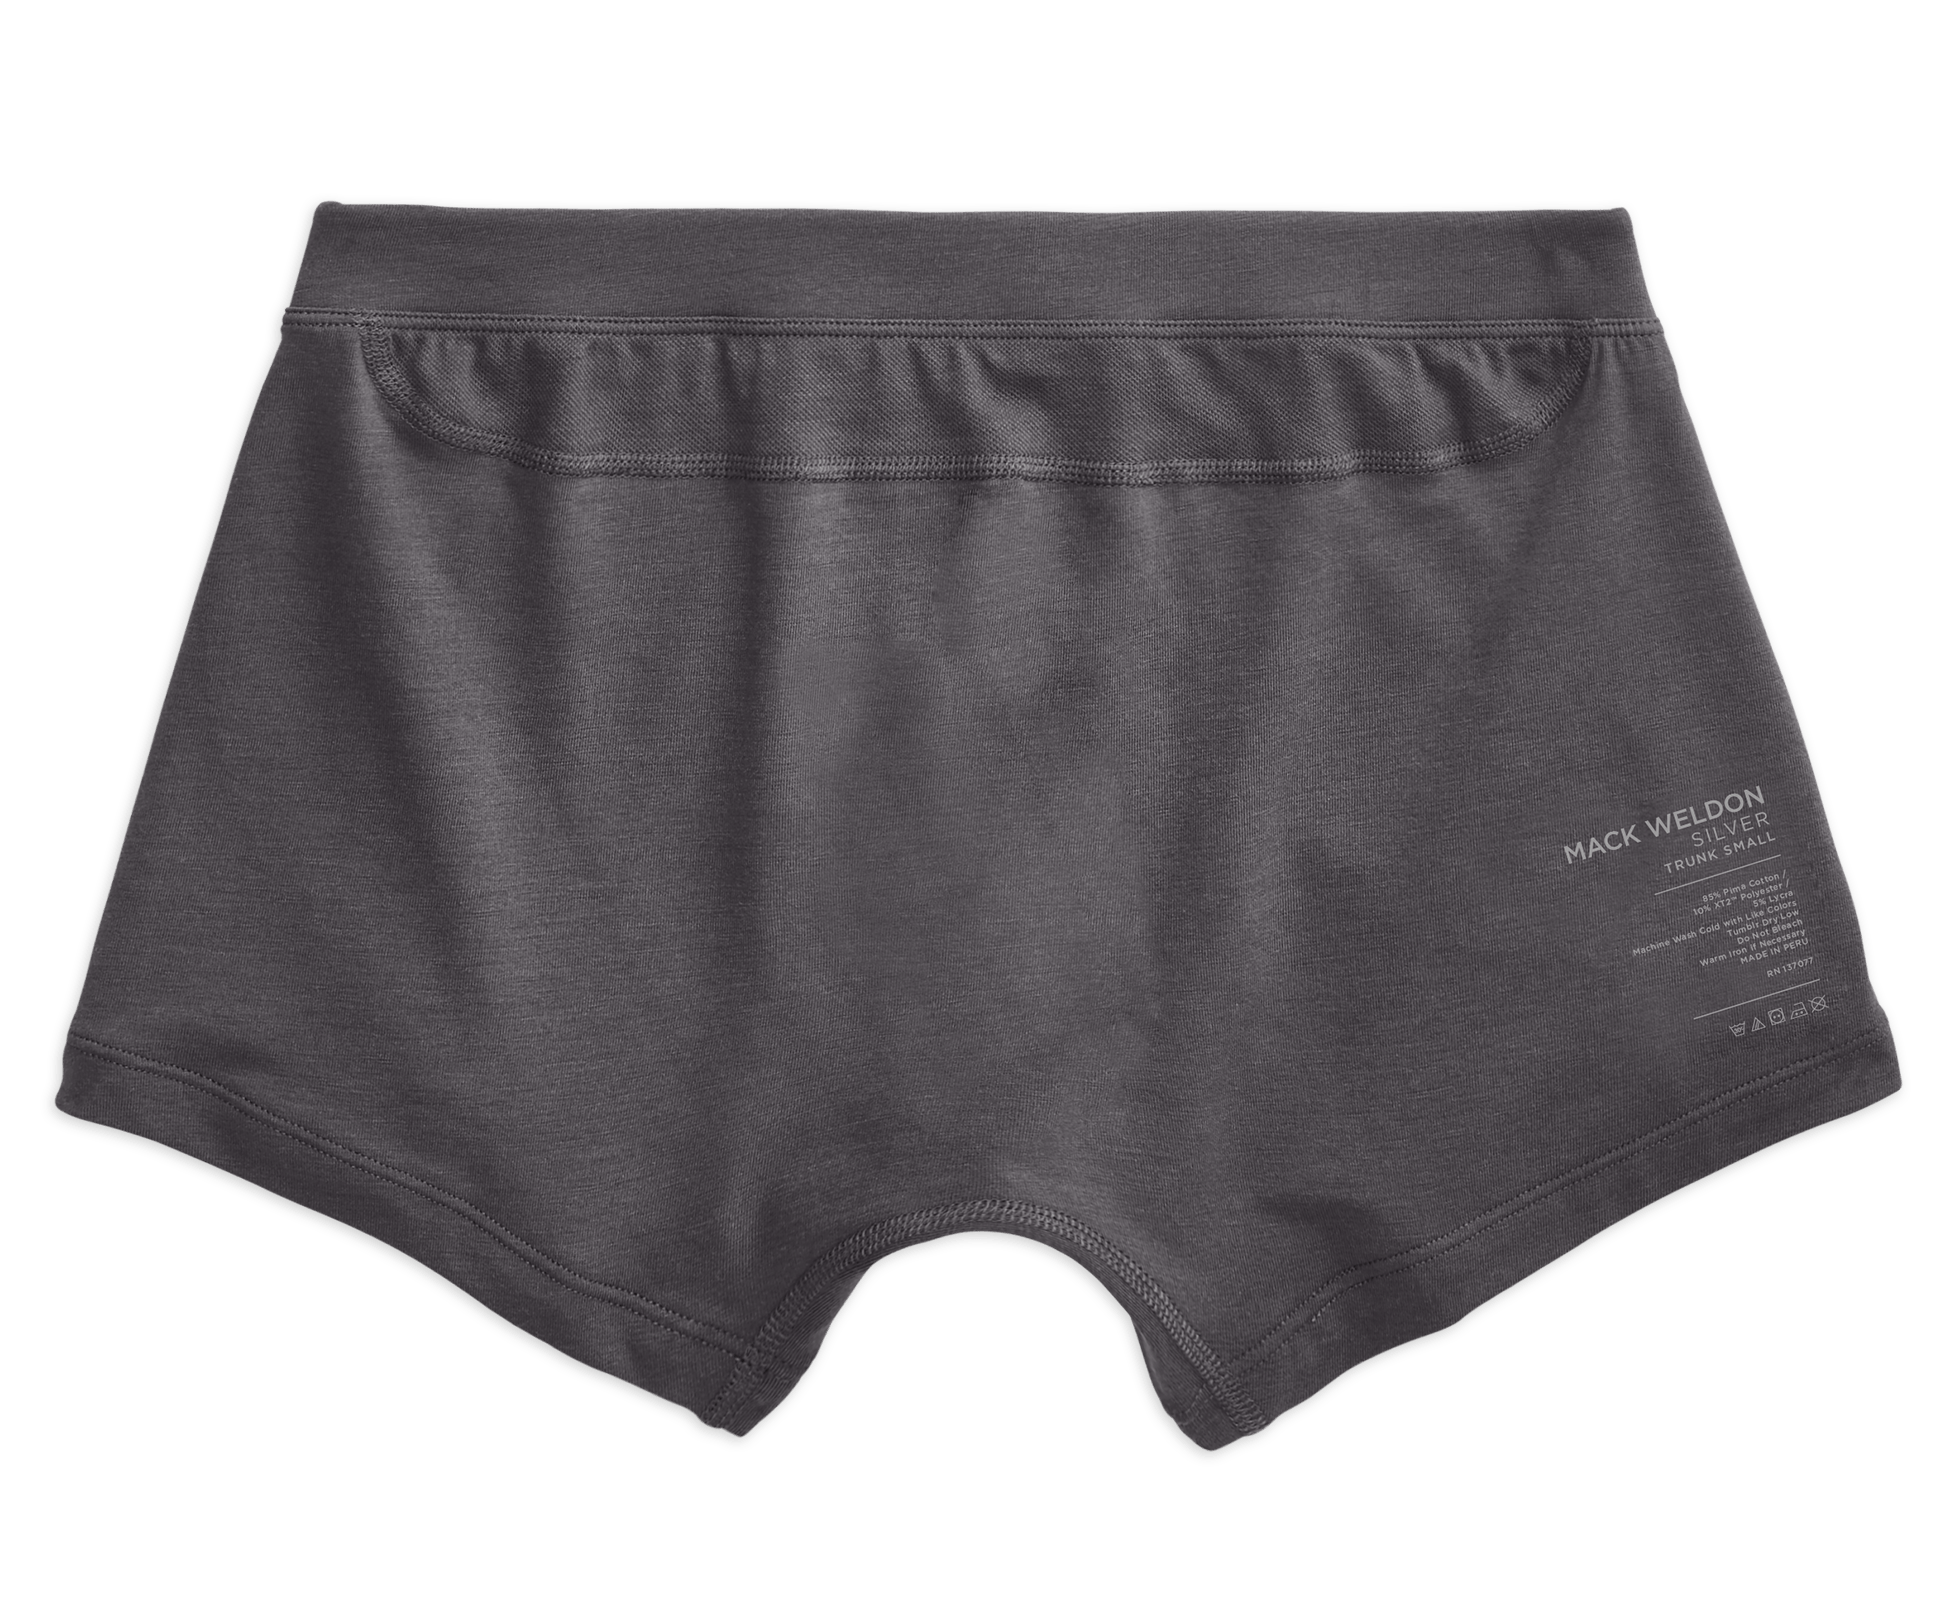 Shop 3 x Bonds Mens Everyday Trunks Underwear Black - Dick Smith